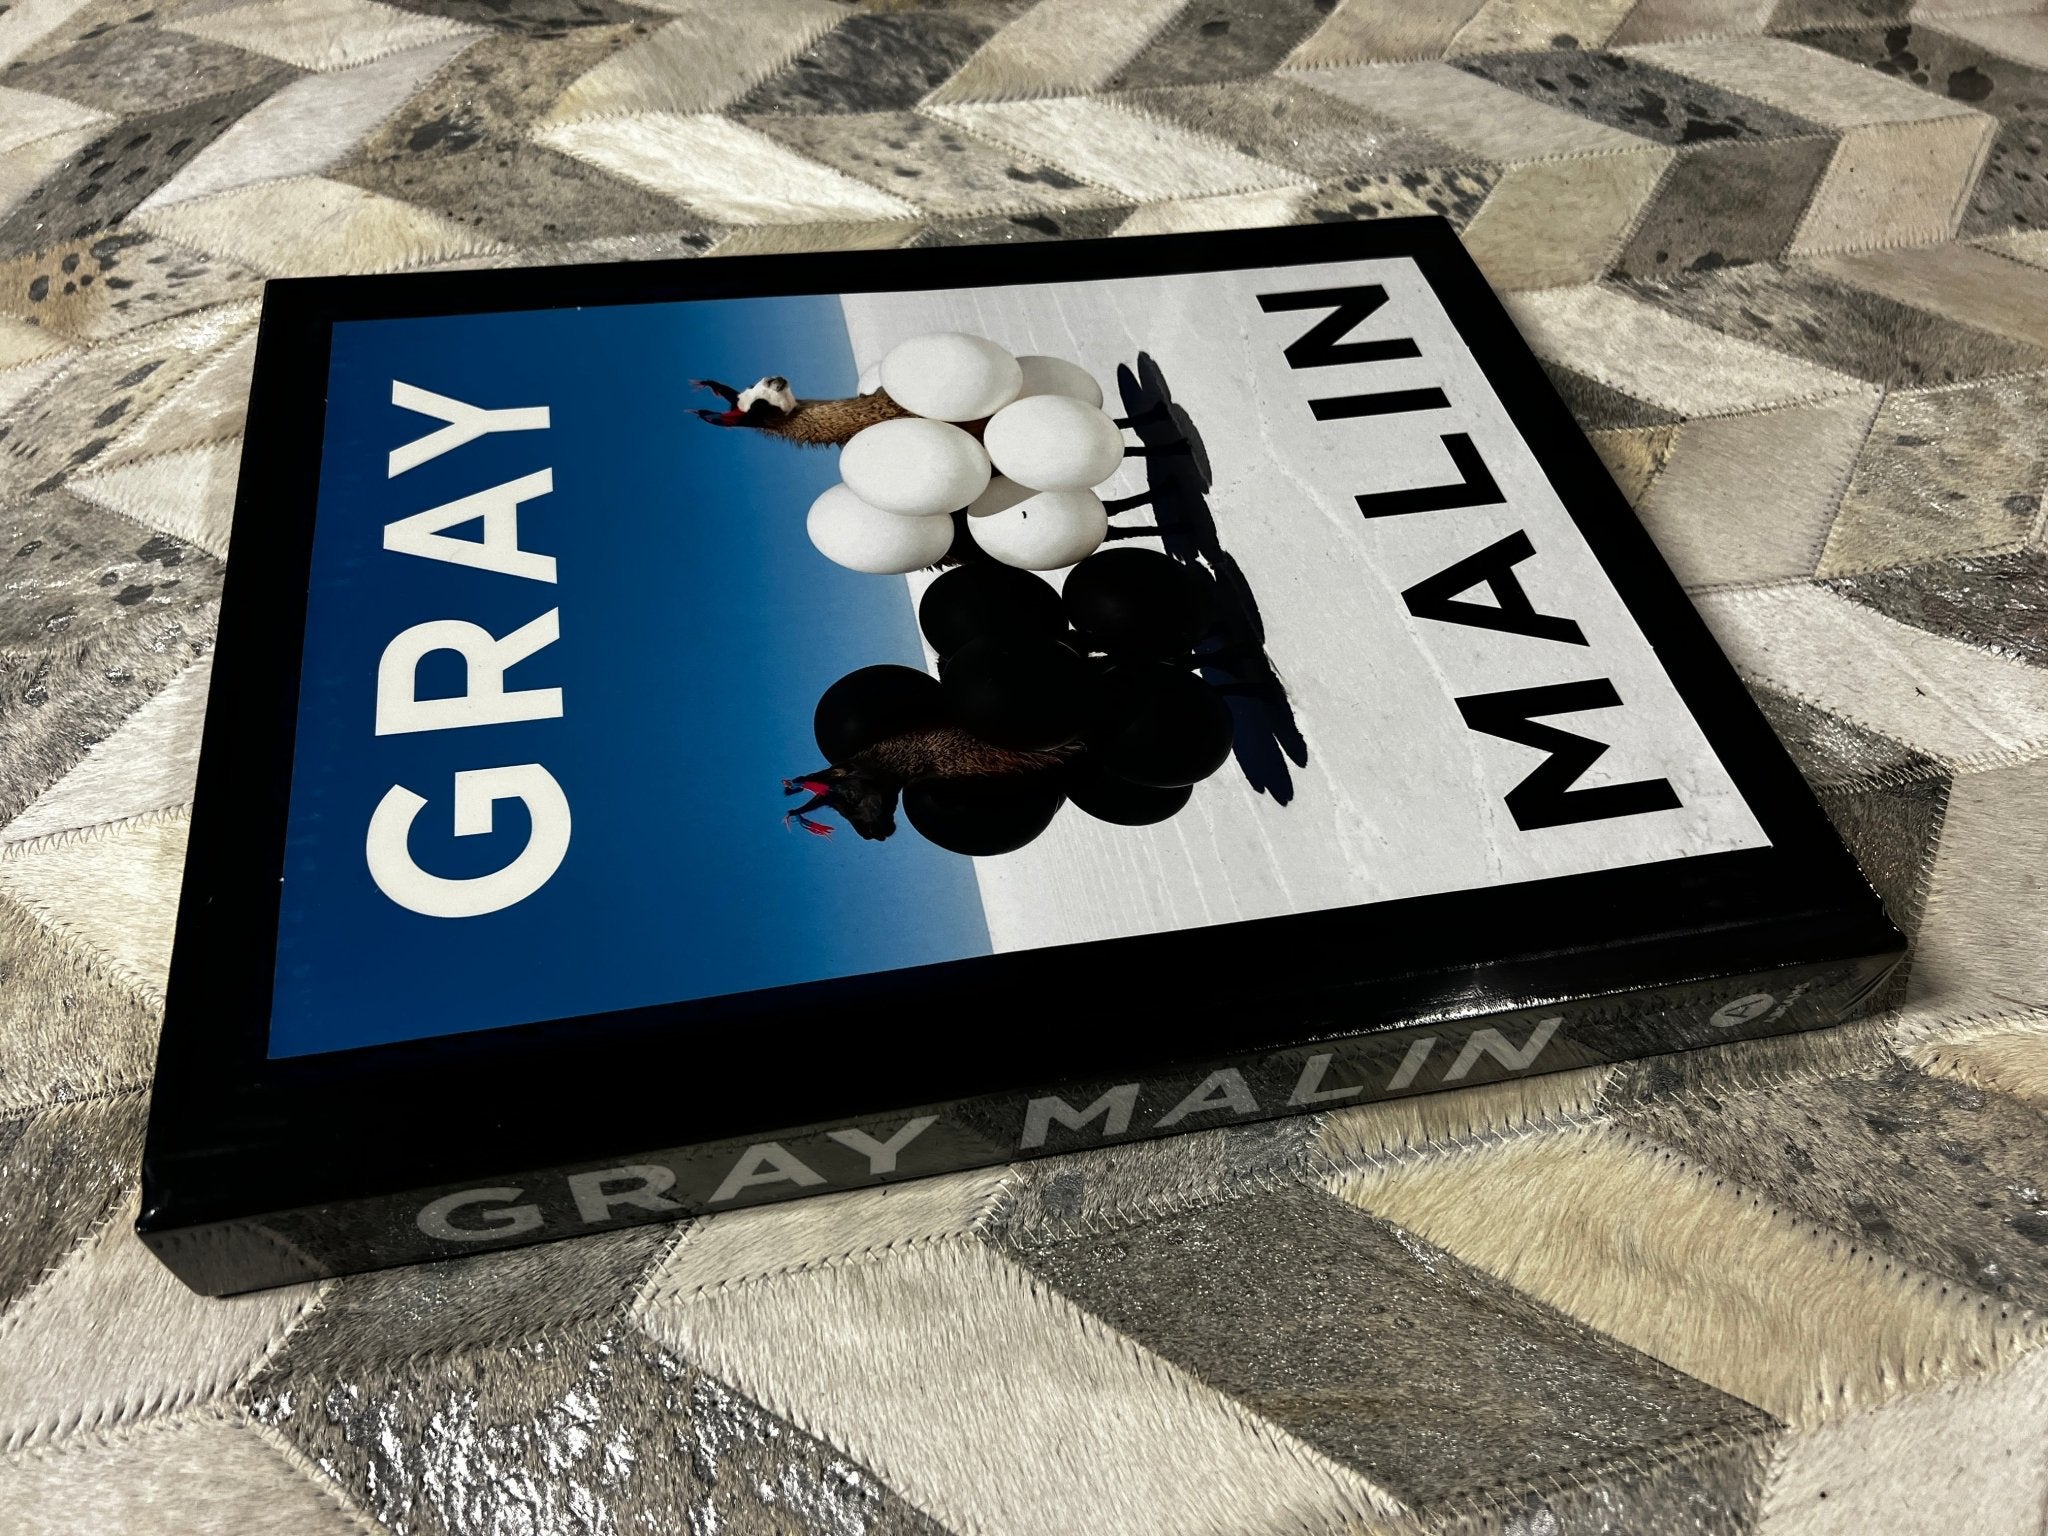 Gray Malin: The Essential Collection Designer Coffee Table Book | Banana Manor Rug Company